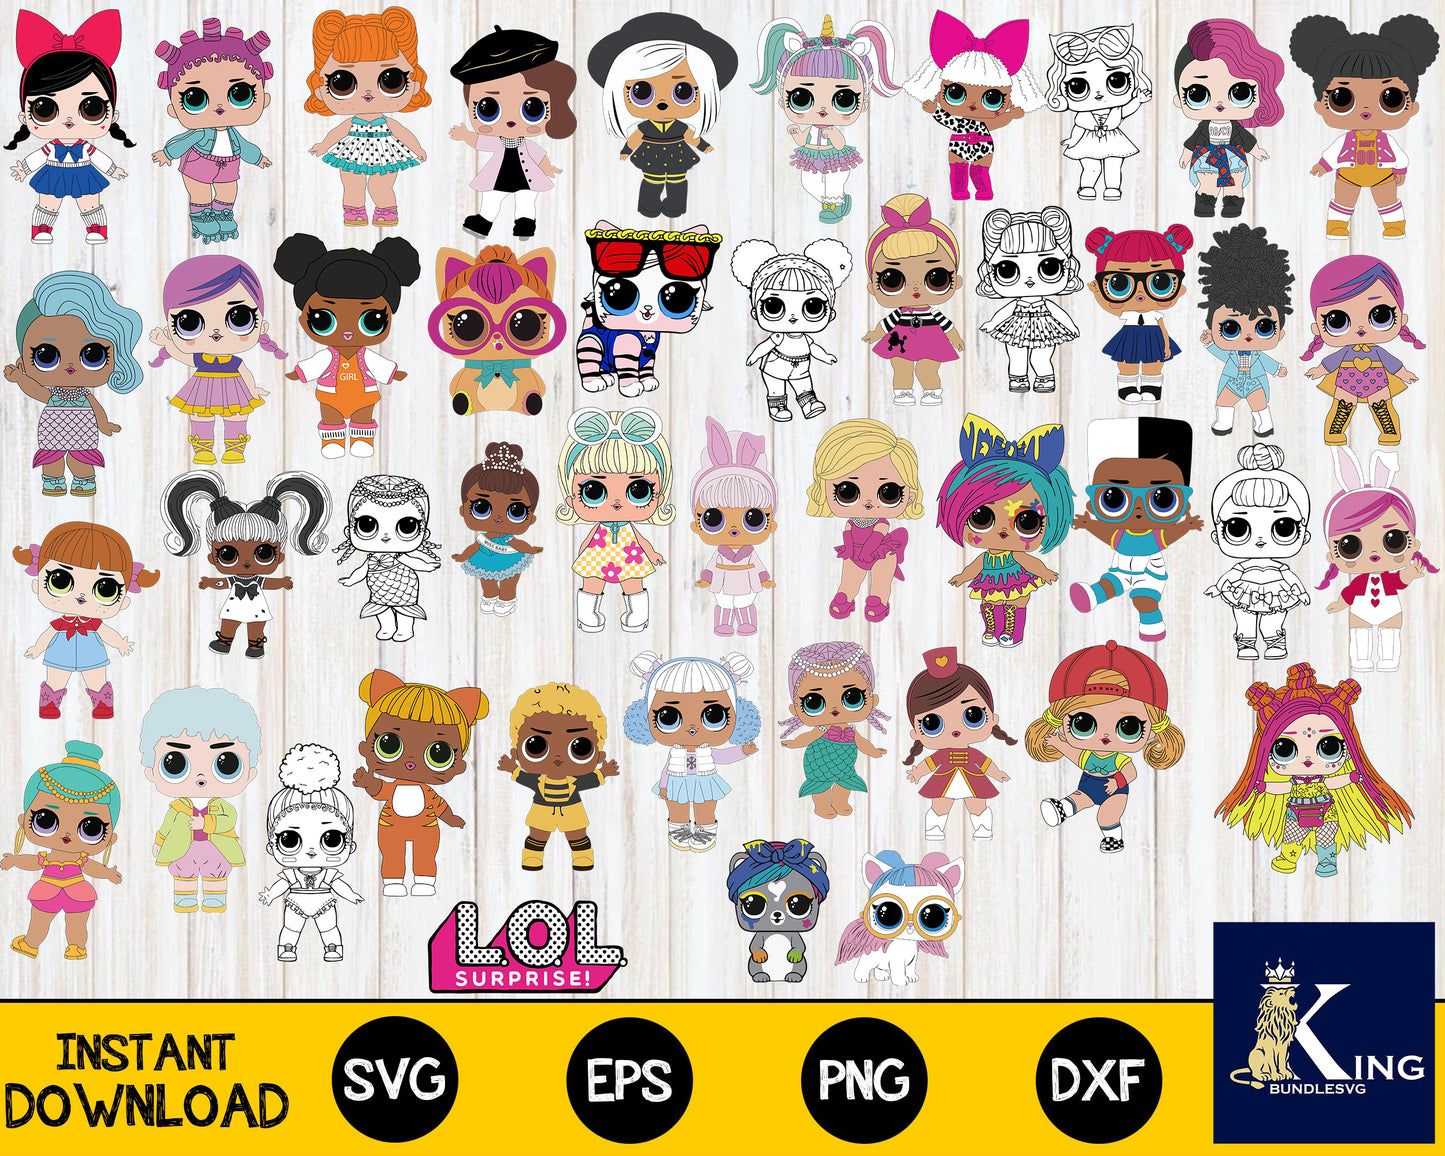 Baby dolls svg,184+ file lol dolls bundle svg eps dxf png, bundle lol dolls for Cricut, Silhouette, digital, file cut